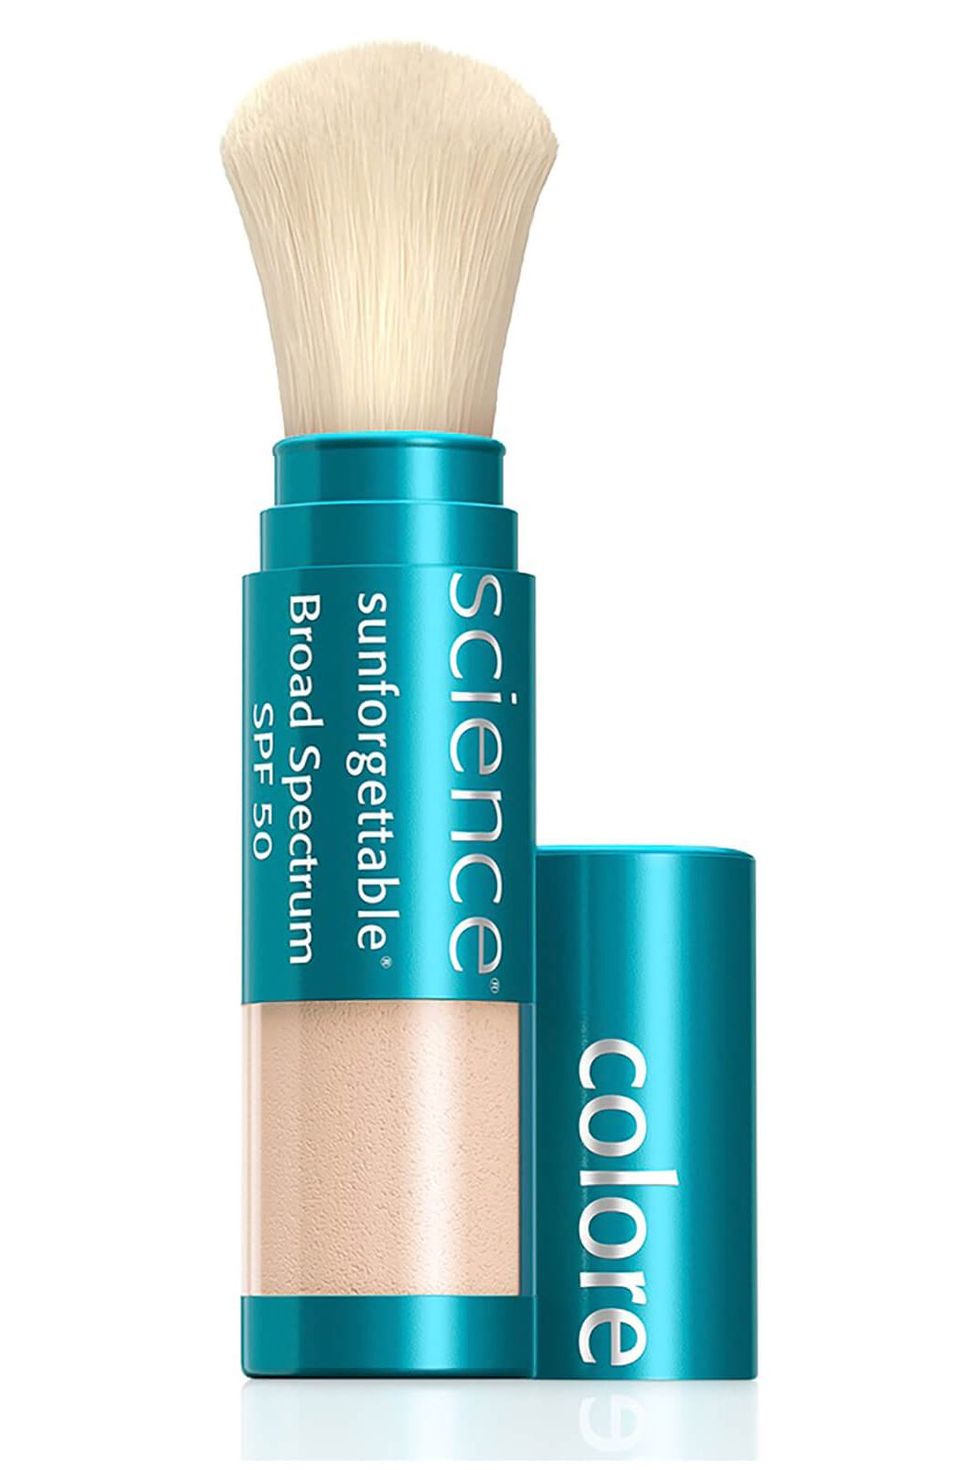 Colorescience Sunforgettable Brush-On Sunscreen SPF 50